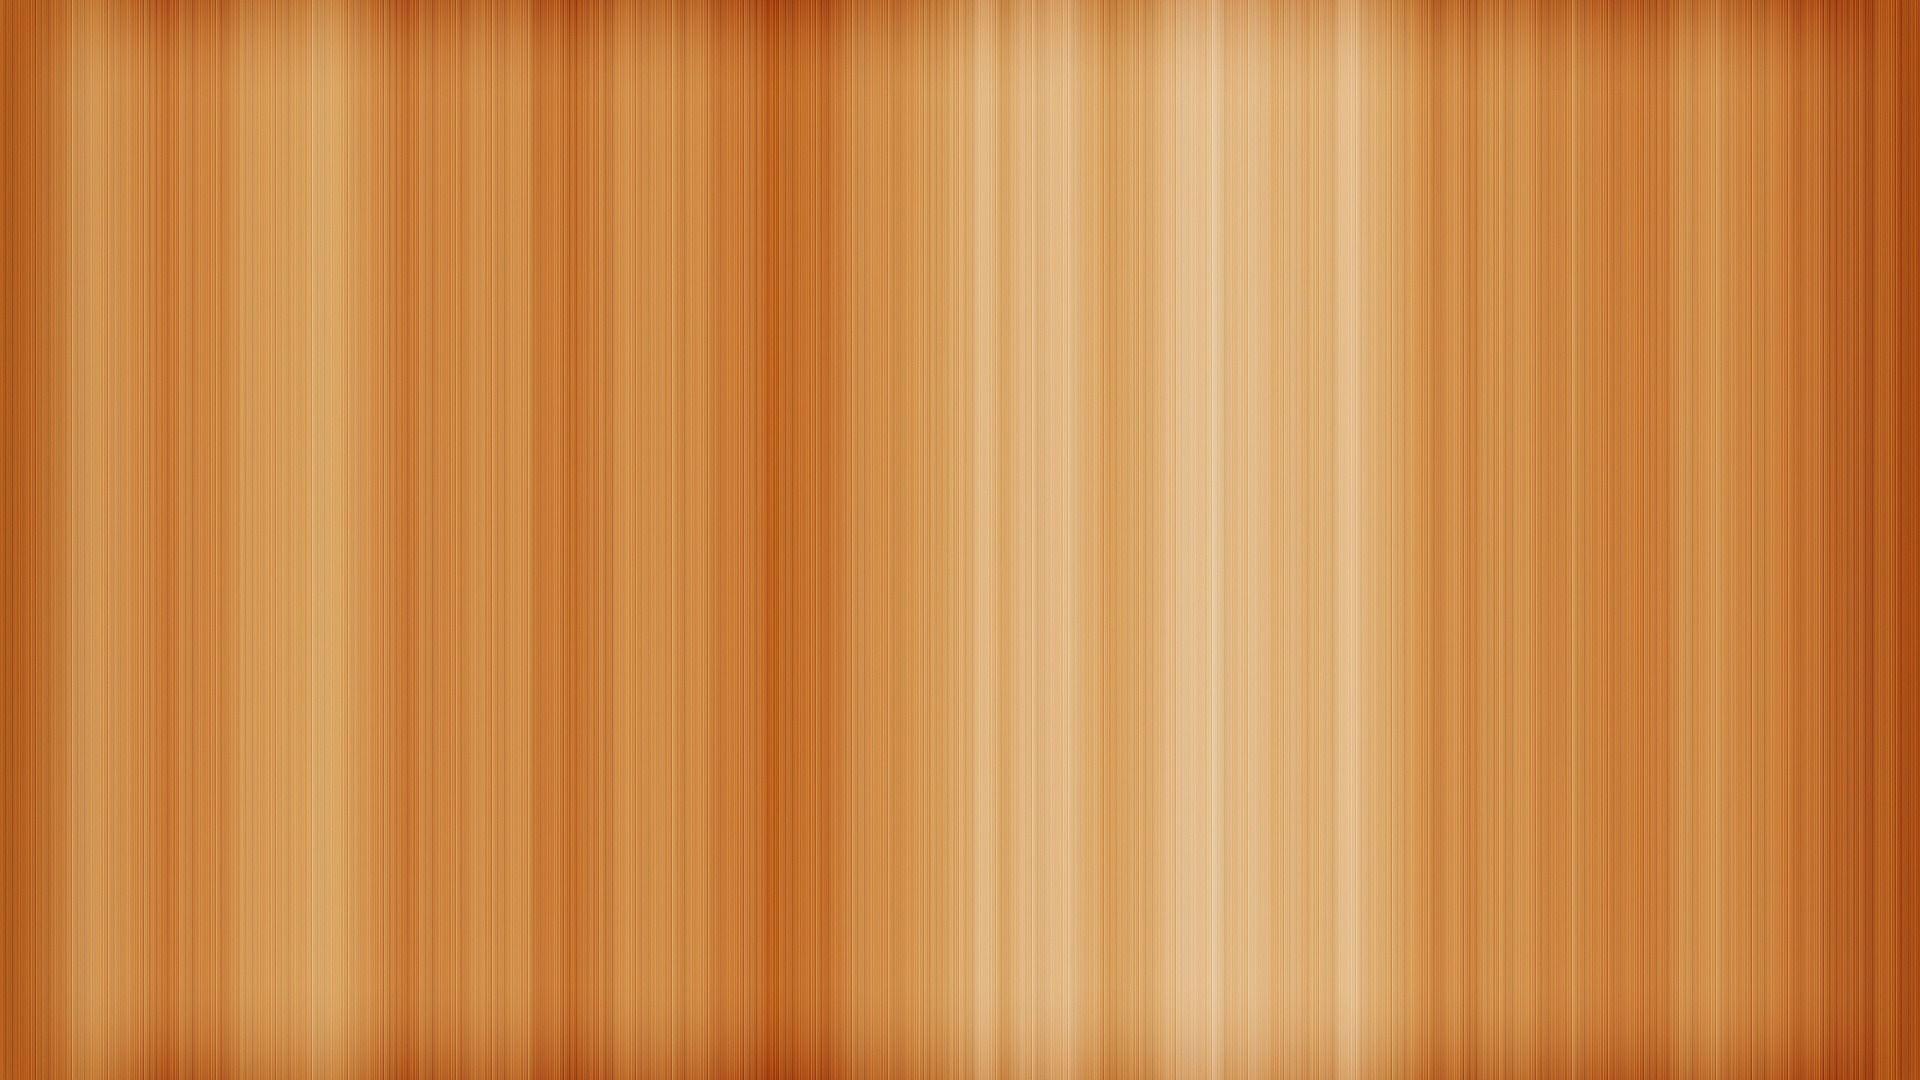 Artificial Wood 1920 X 1080 Wallpaper